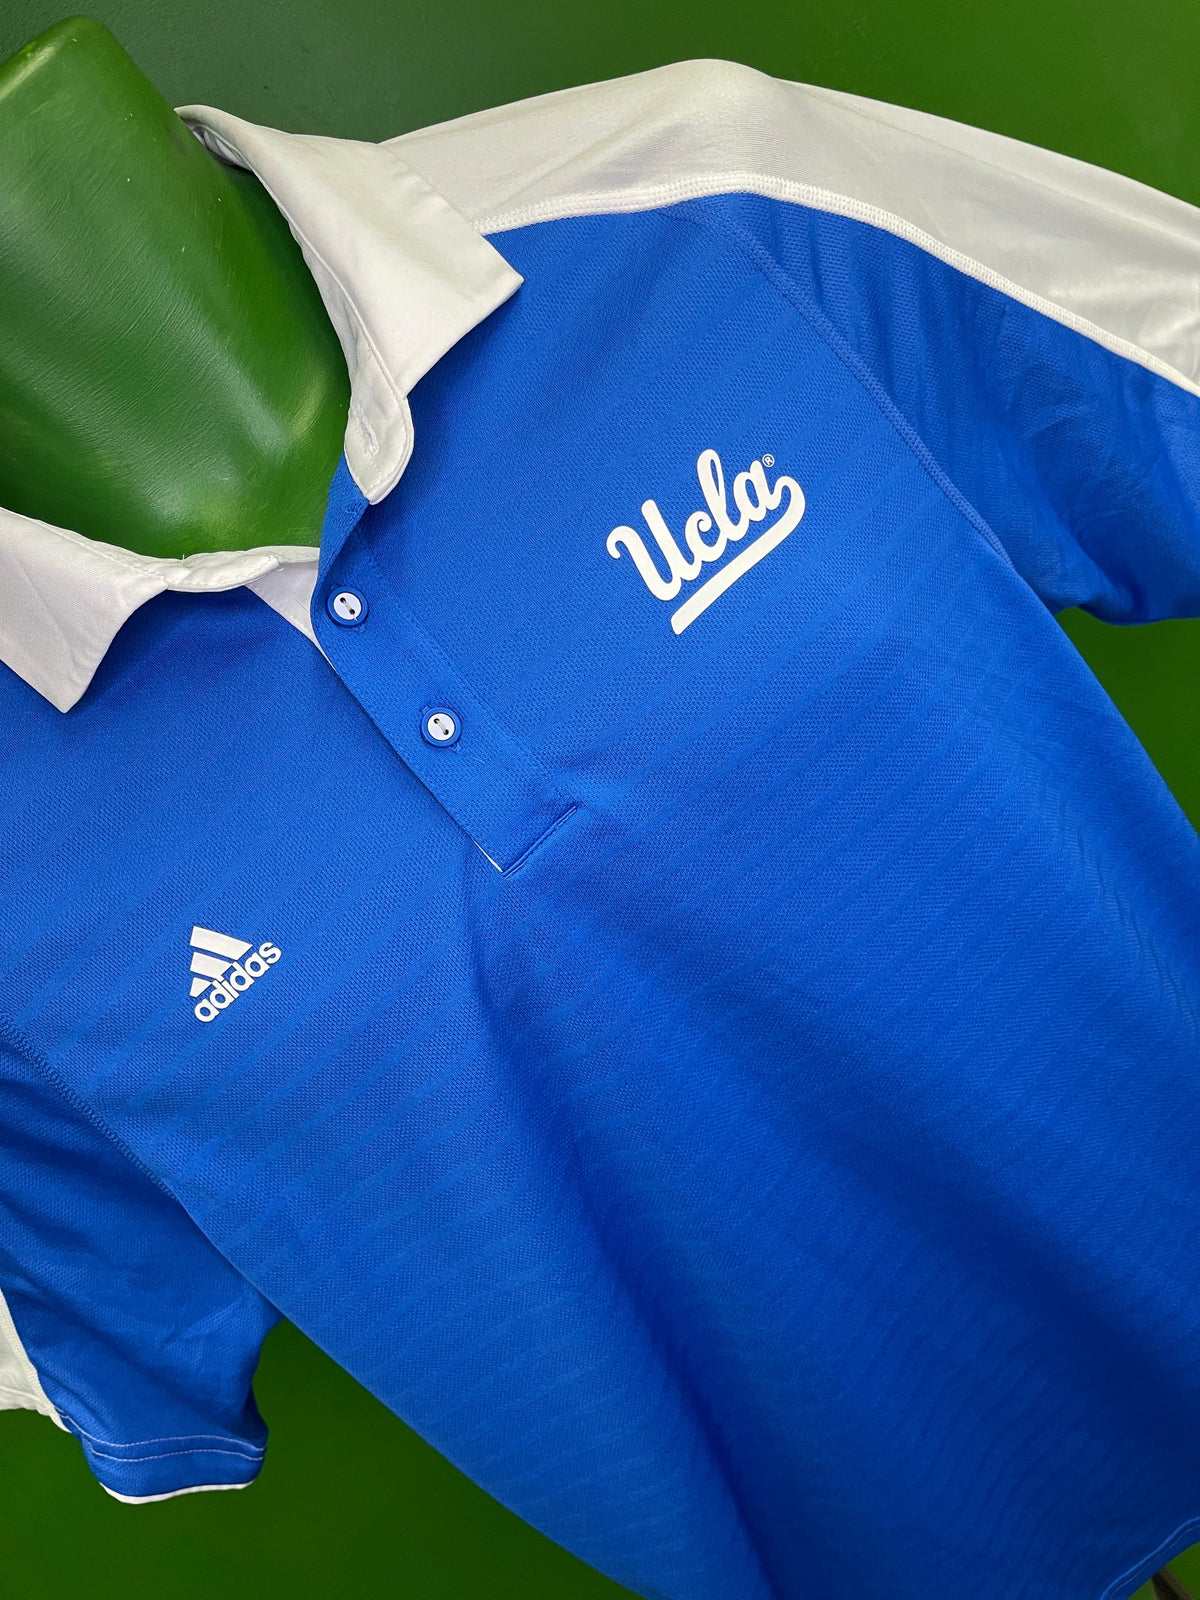 NCAA UCLA Bruins Adidas Polo Golf Shirt Climalite Men's Medium